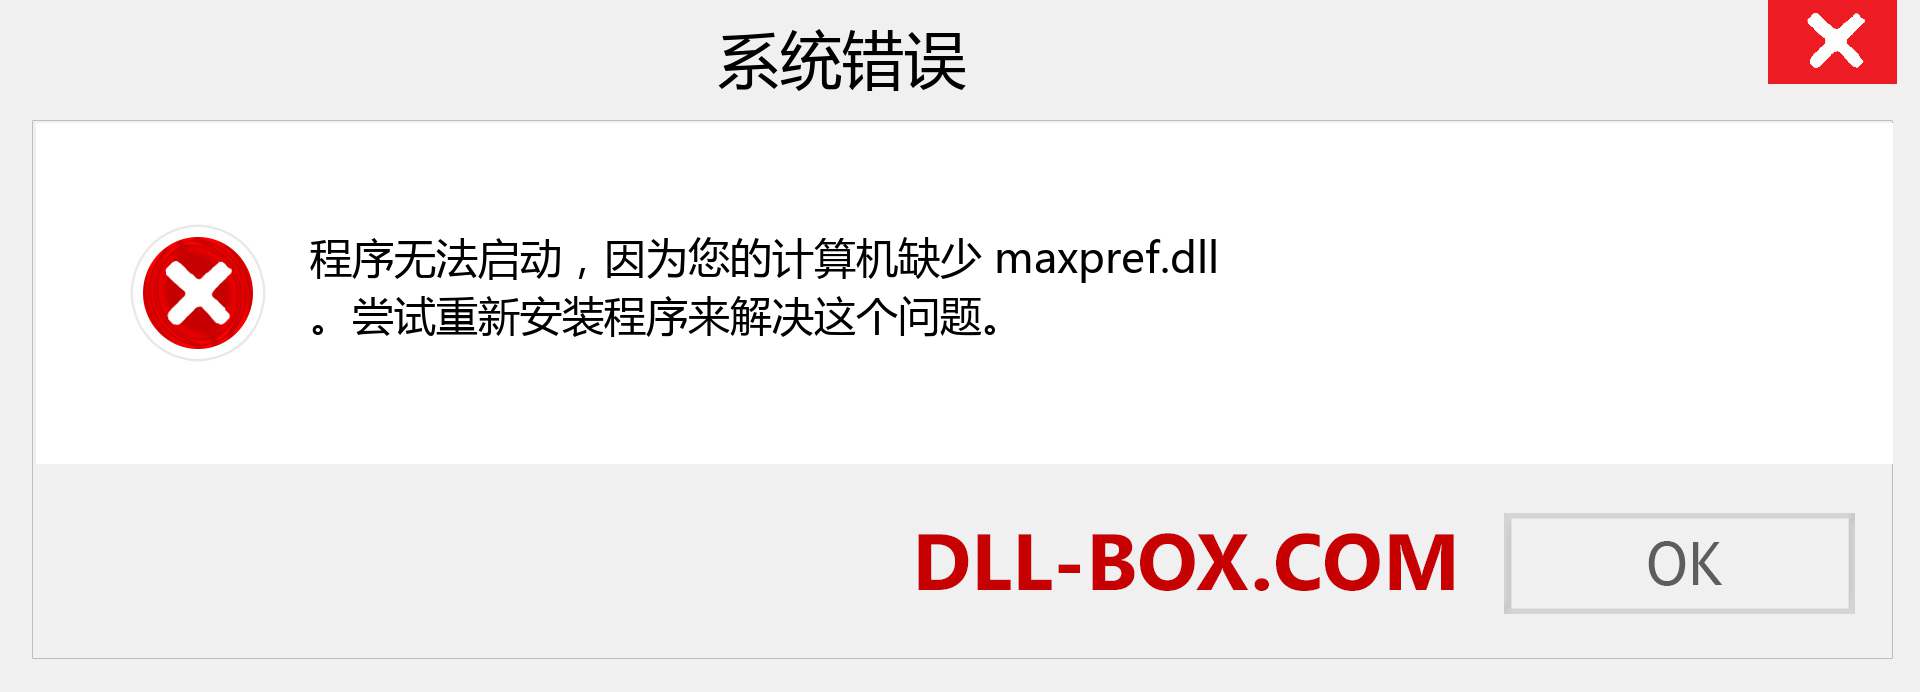 maxpref.dll 文件丢失？。 适用于 Windows 7、8、10 的下载 - 修复 Windows、照片、图像上的 maxpref dll 丢失错误